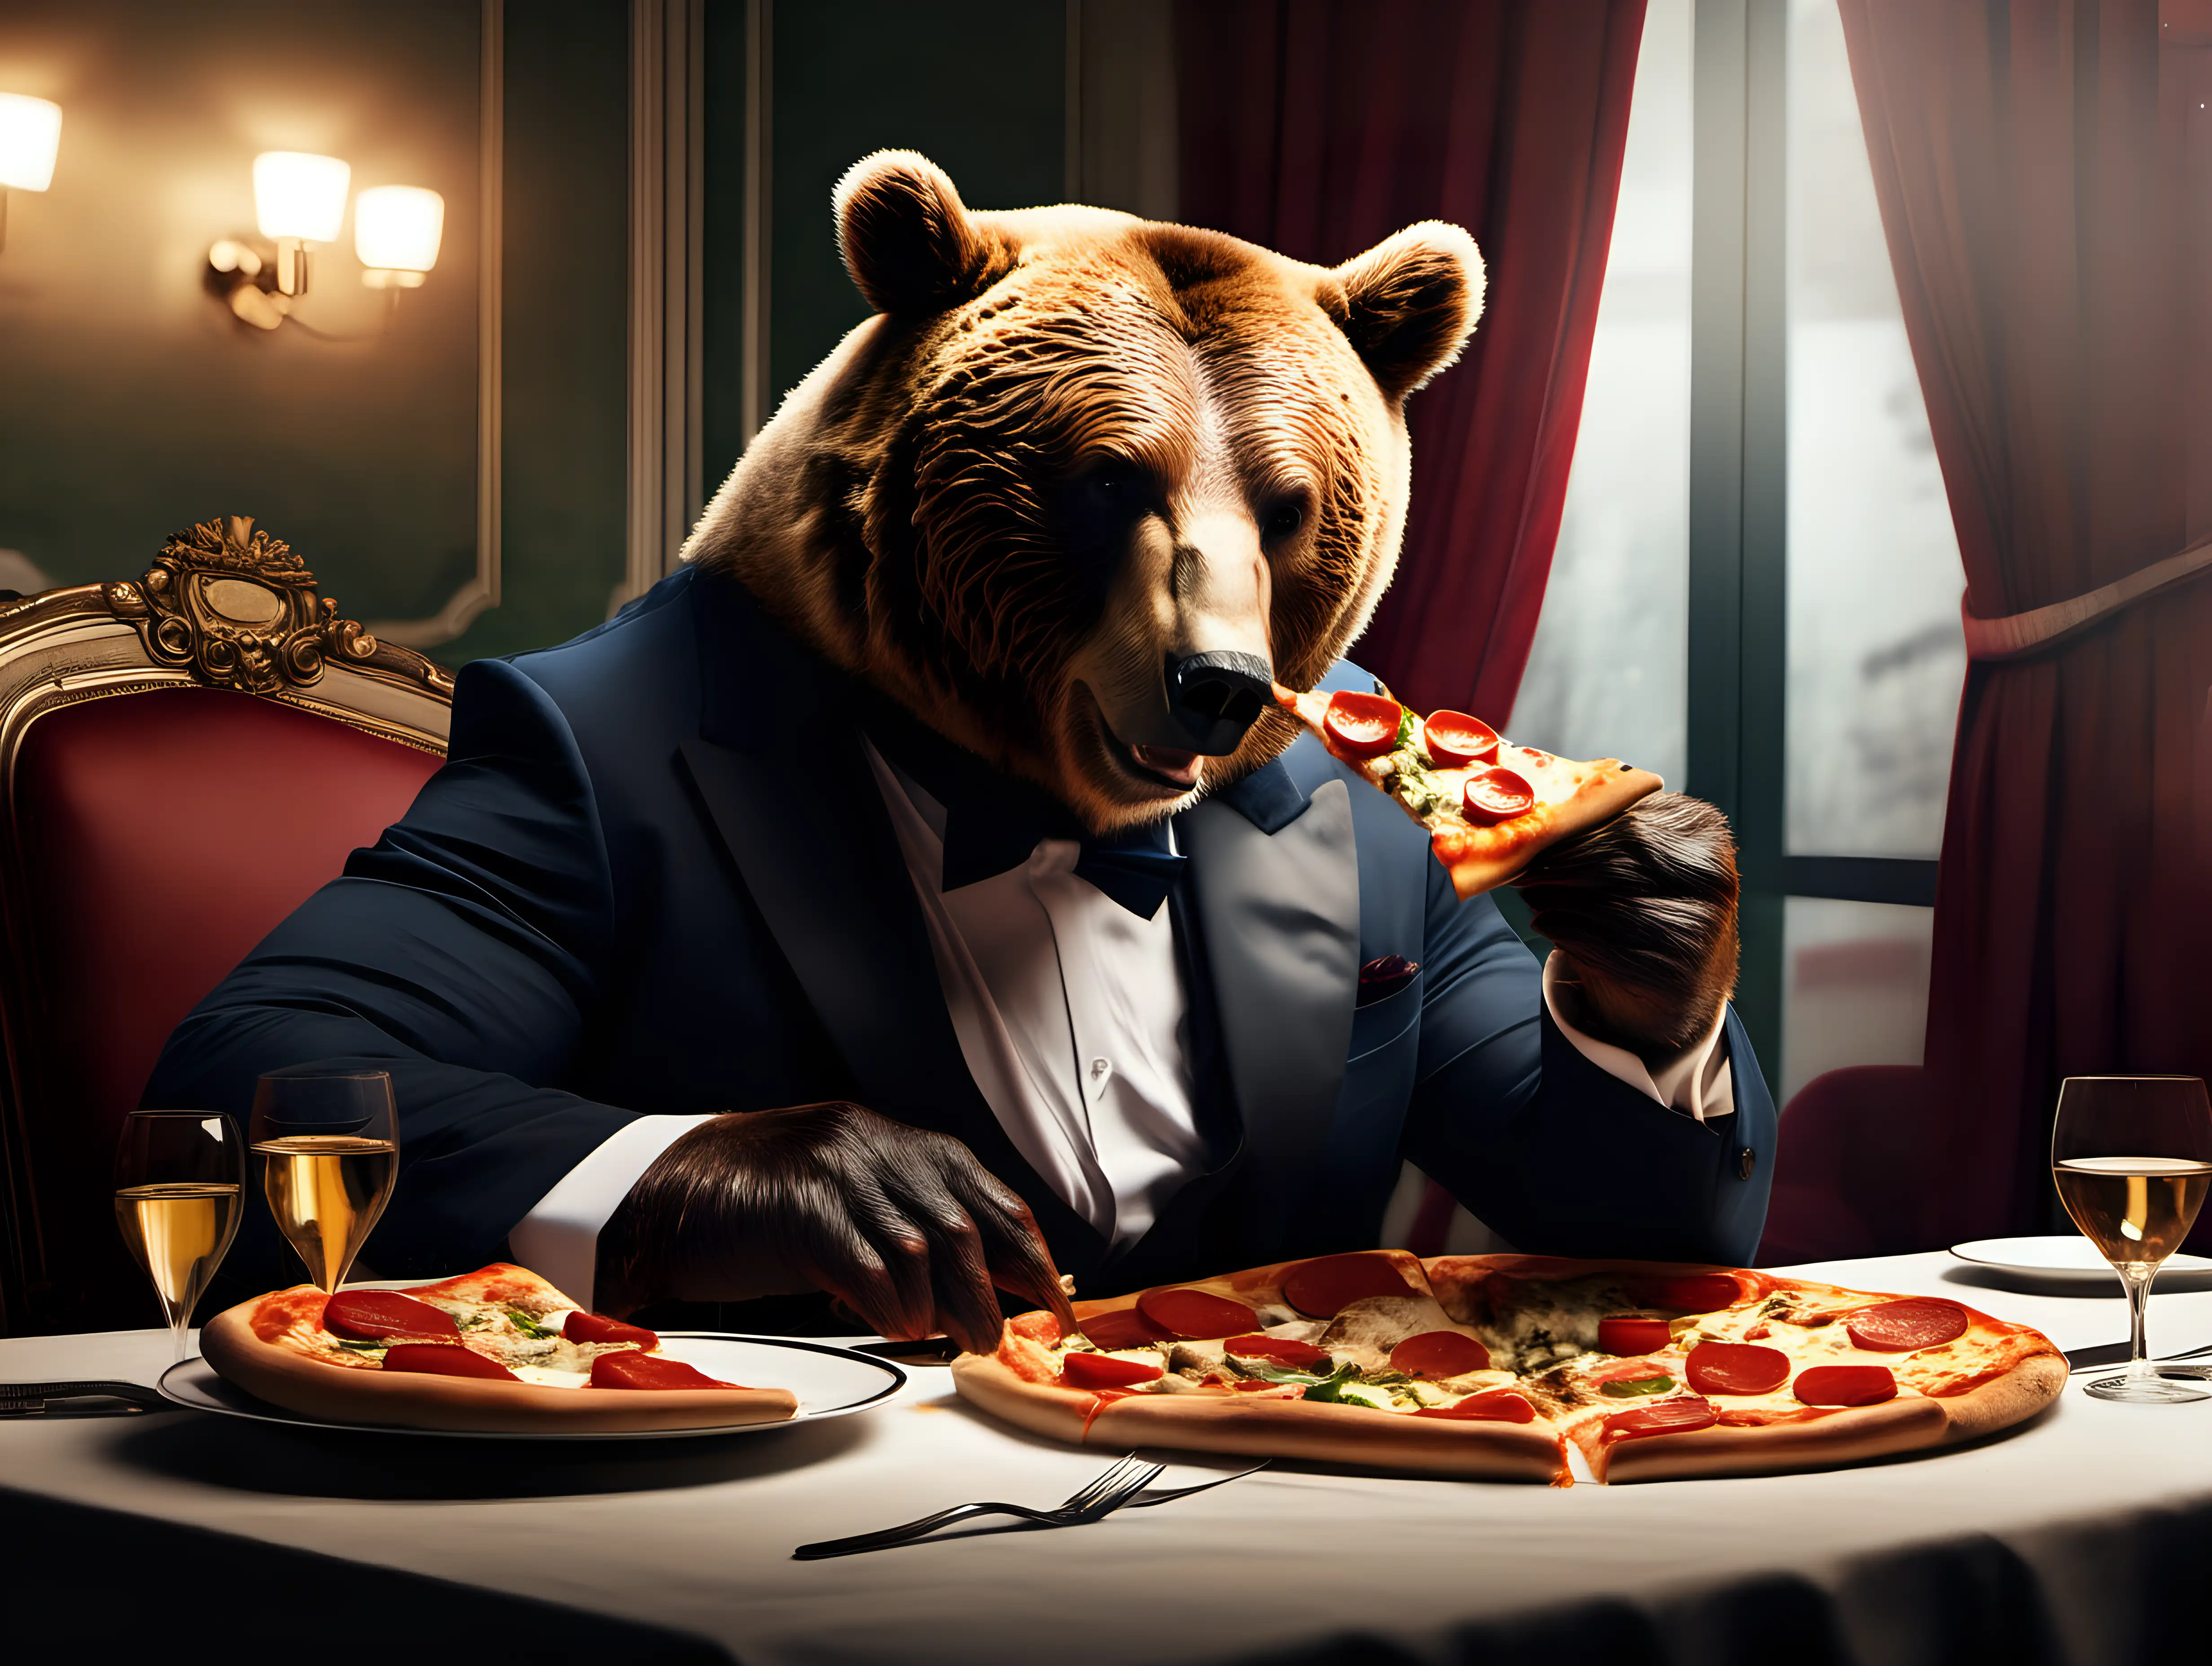 Elegant Bear Dining on Gourmet Pizza in Upscale Restaurant